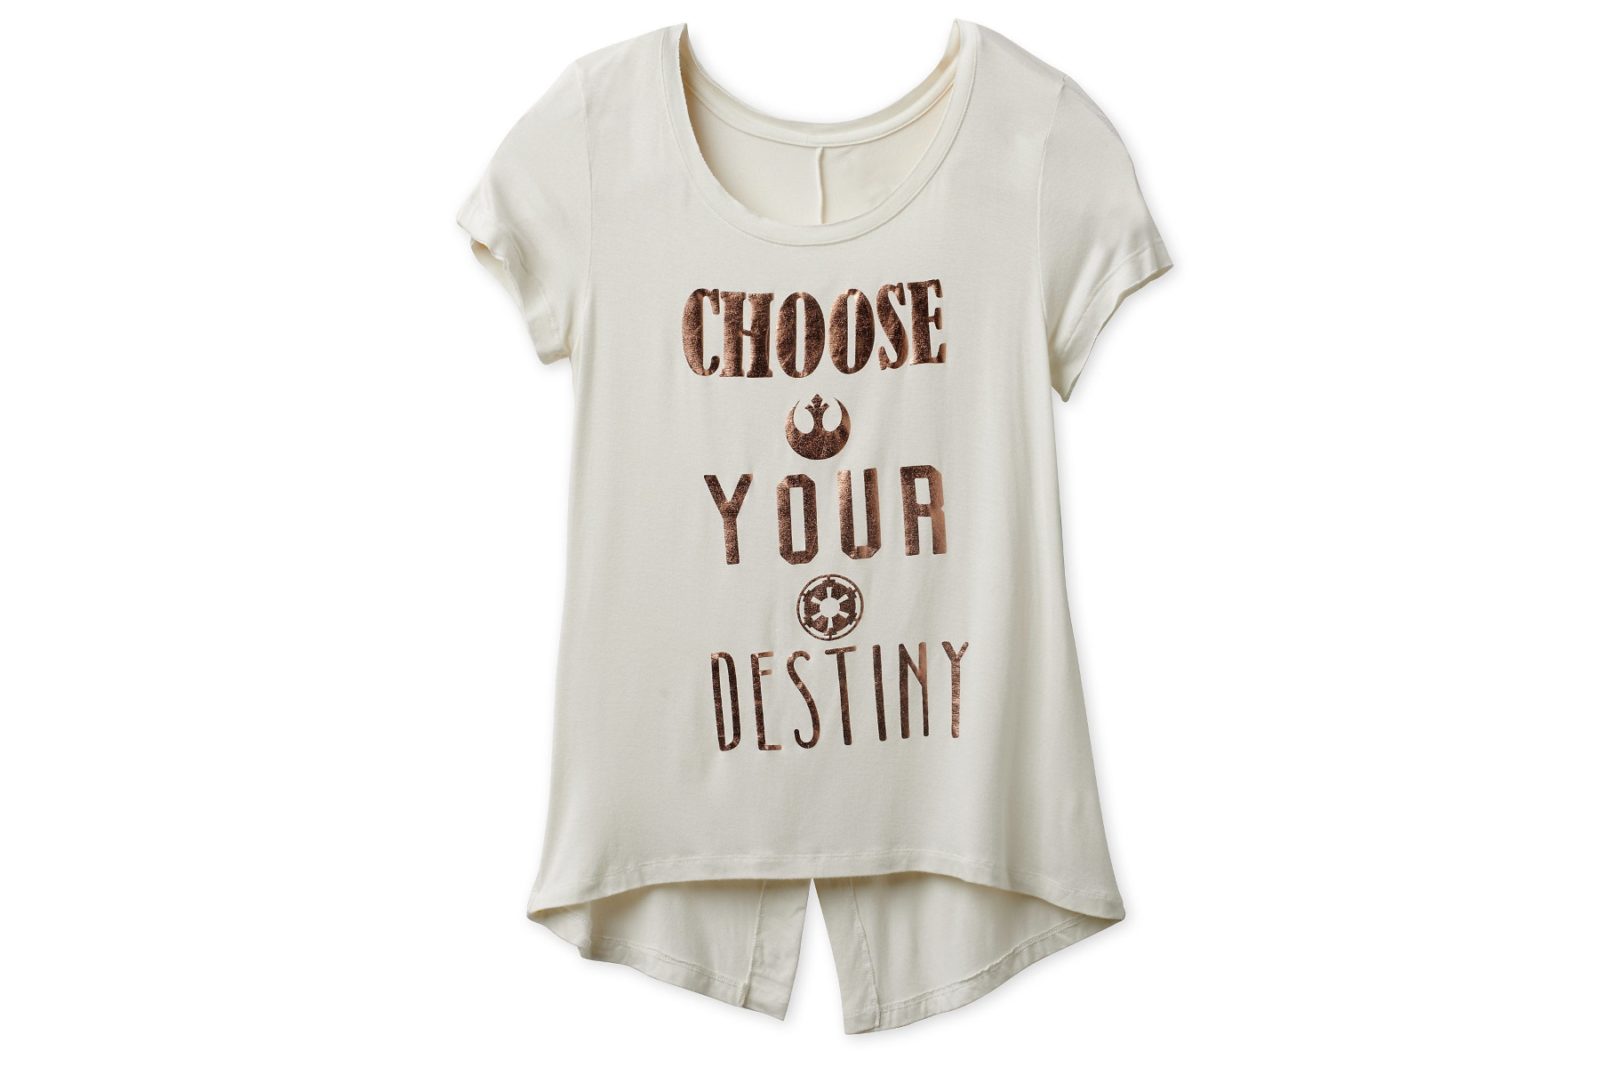 Women's Star Wars Choose Your Destiny T-Shirt at Shop Disney